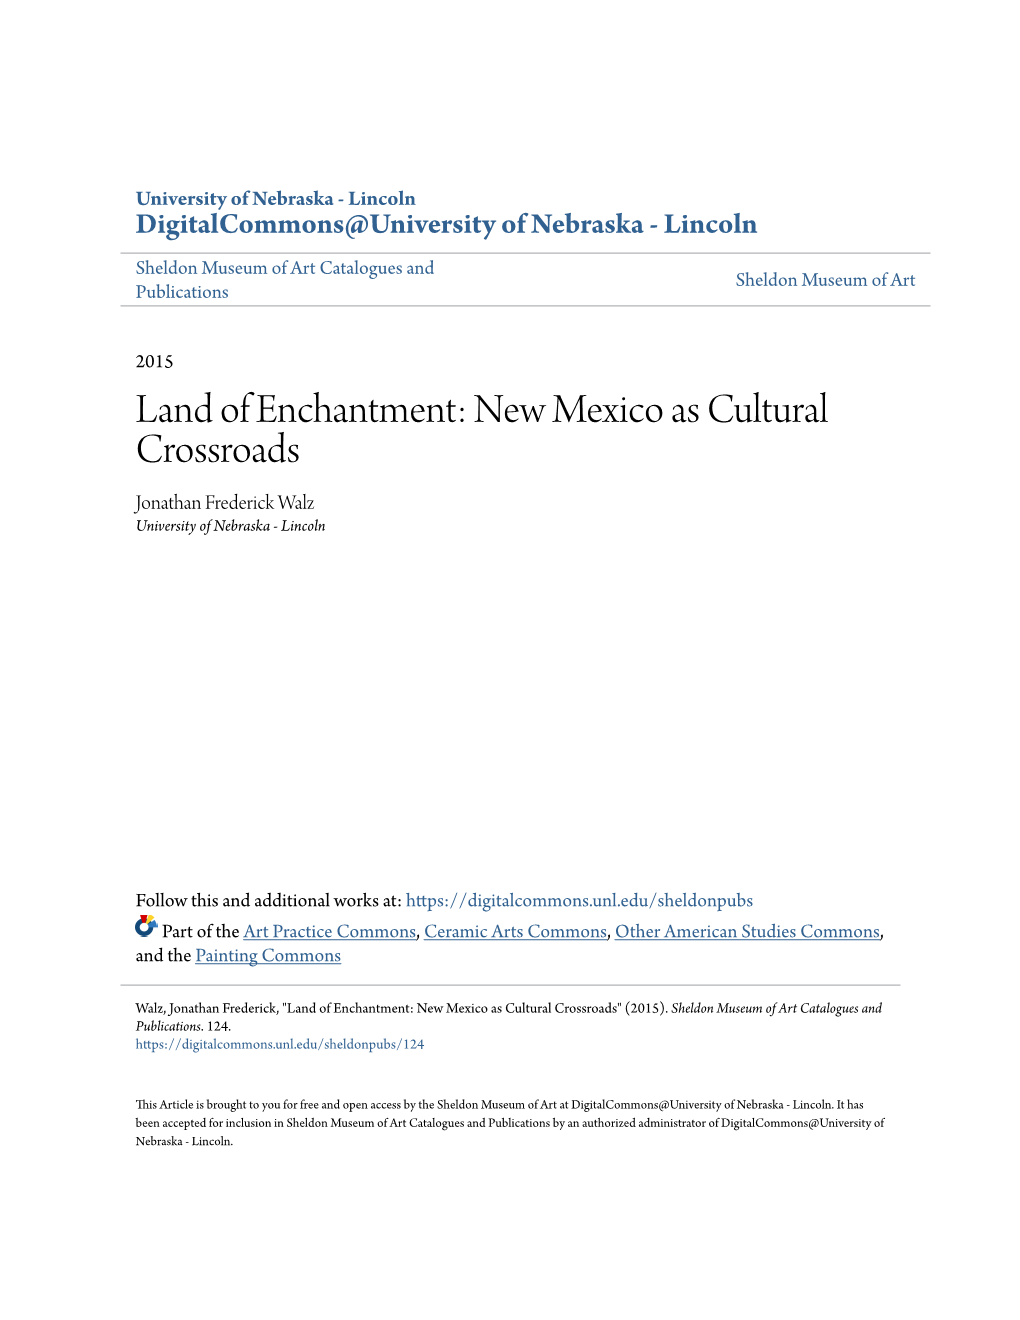 New Mexico As Cultural Crossroads Jonathan Frederick Walz University of Nebraska - Lincoln